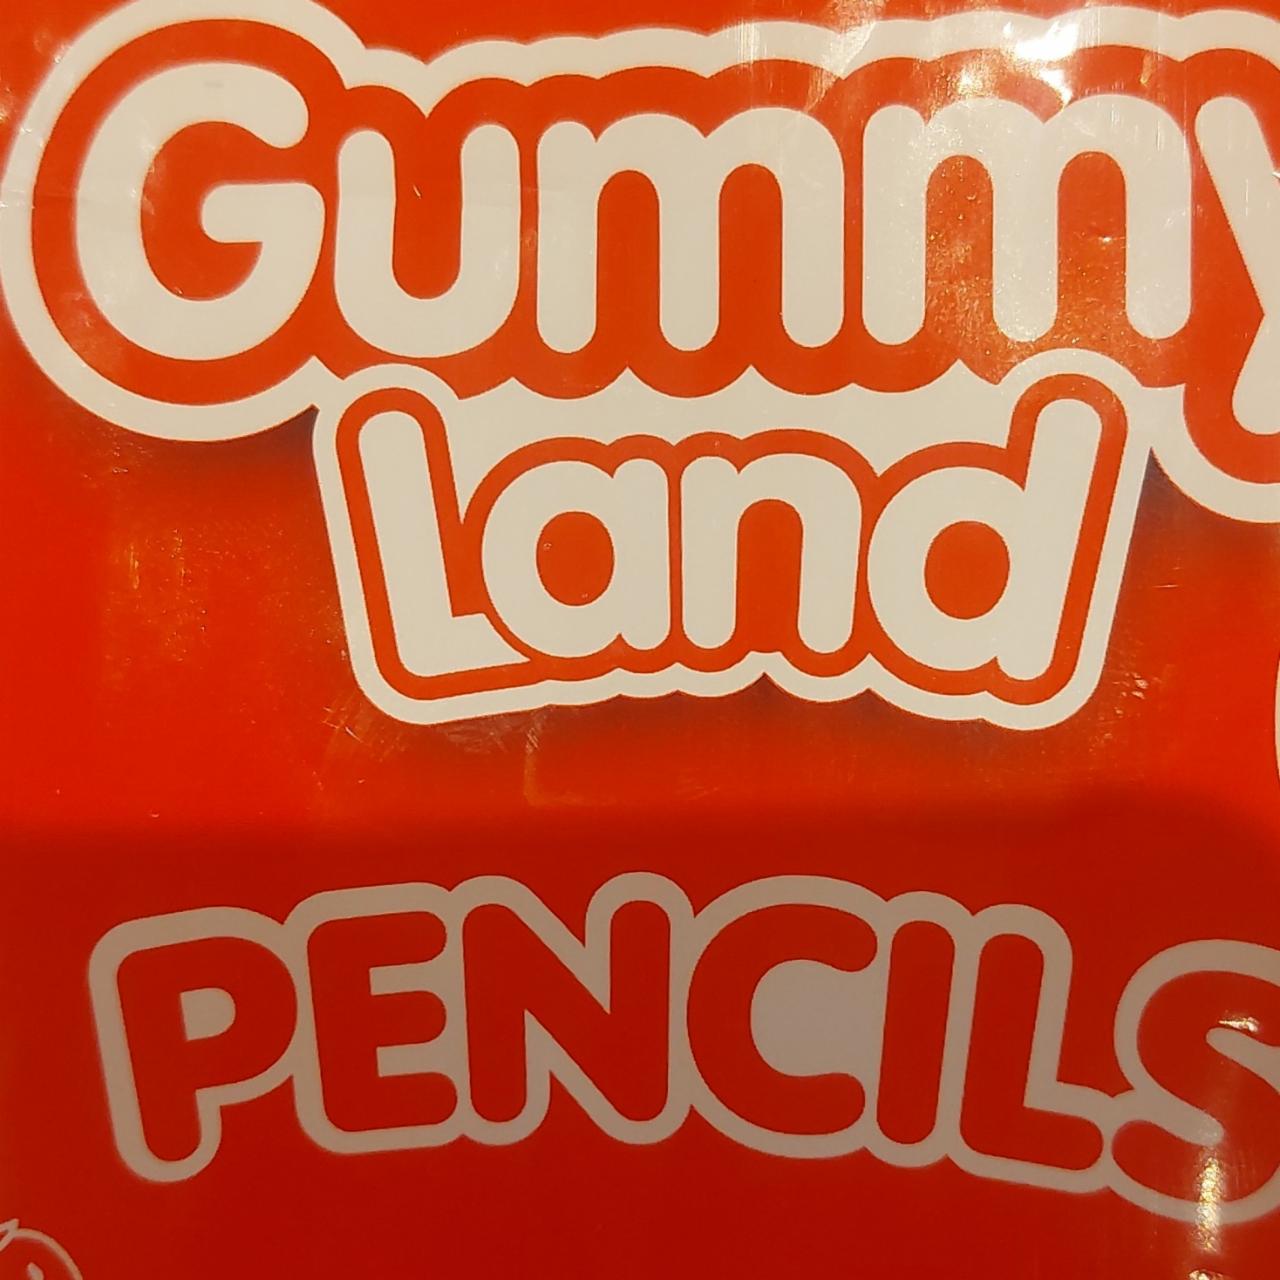 Fotografie - Pencils Gummy Land